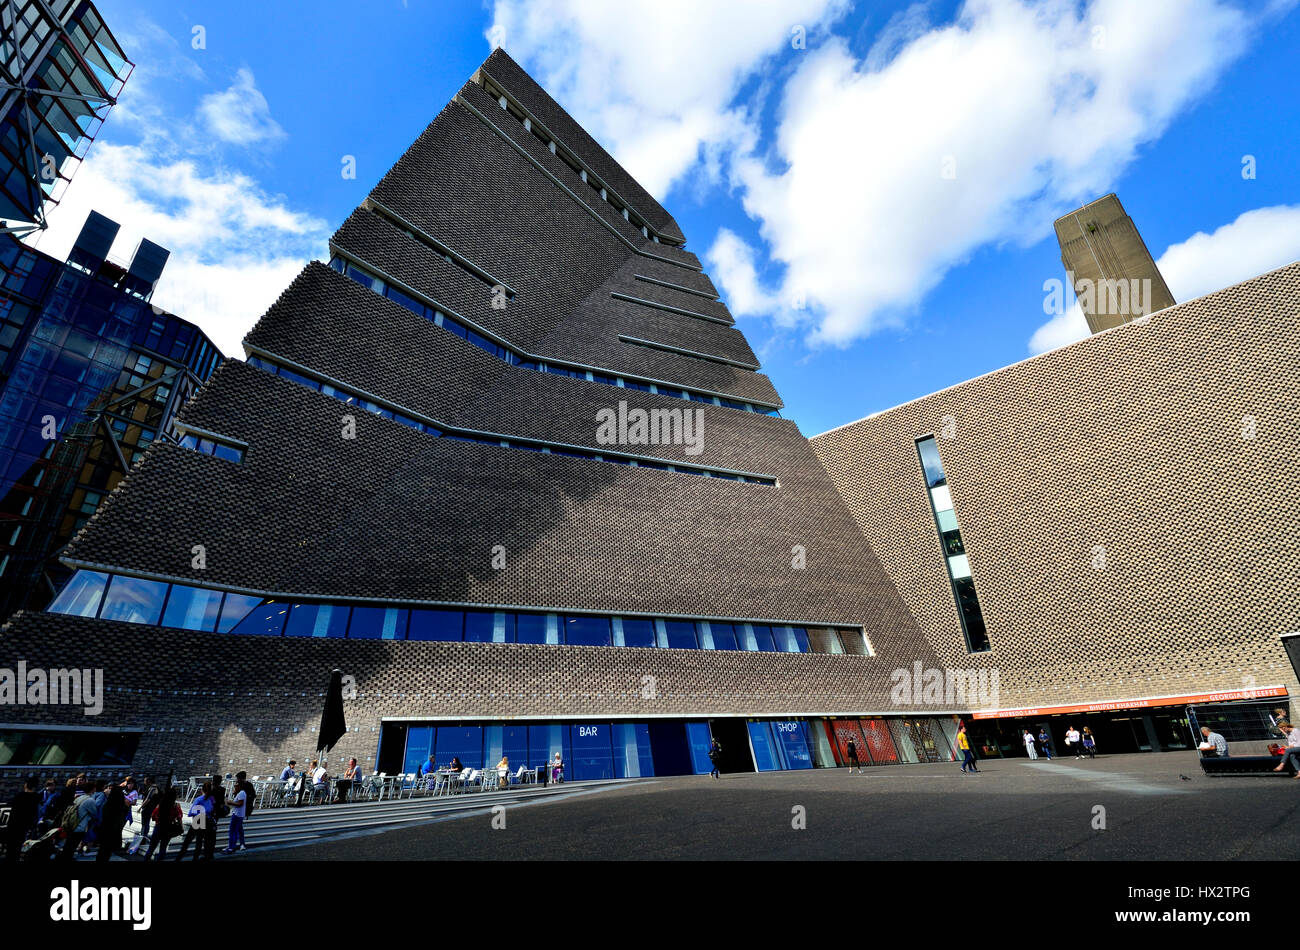 London, England, UK. Tate Modern art gallery - new wing 'Pyramid Tower' (2016) Stock Photo